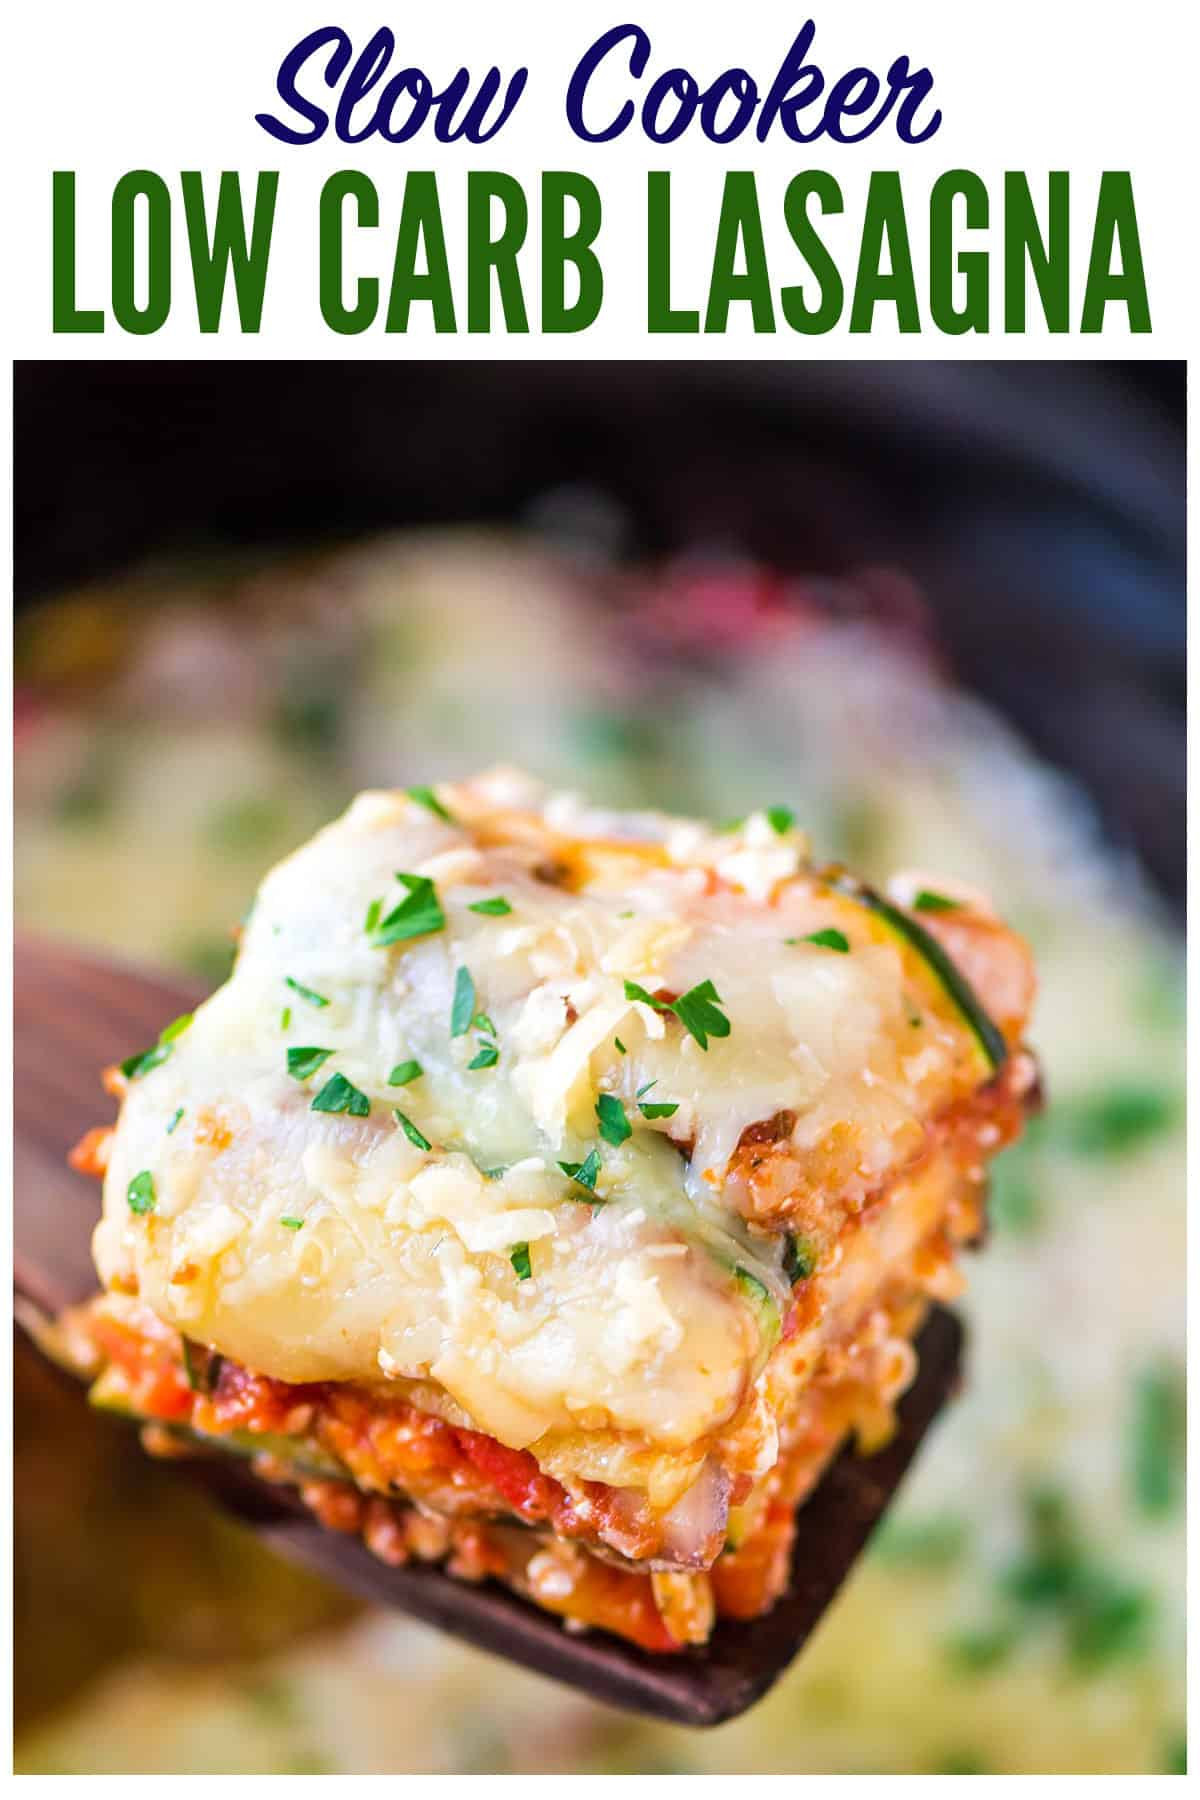 Low Calorie Crockpot Recipes
 Crock Pot Low Carb Lasagna Recipe